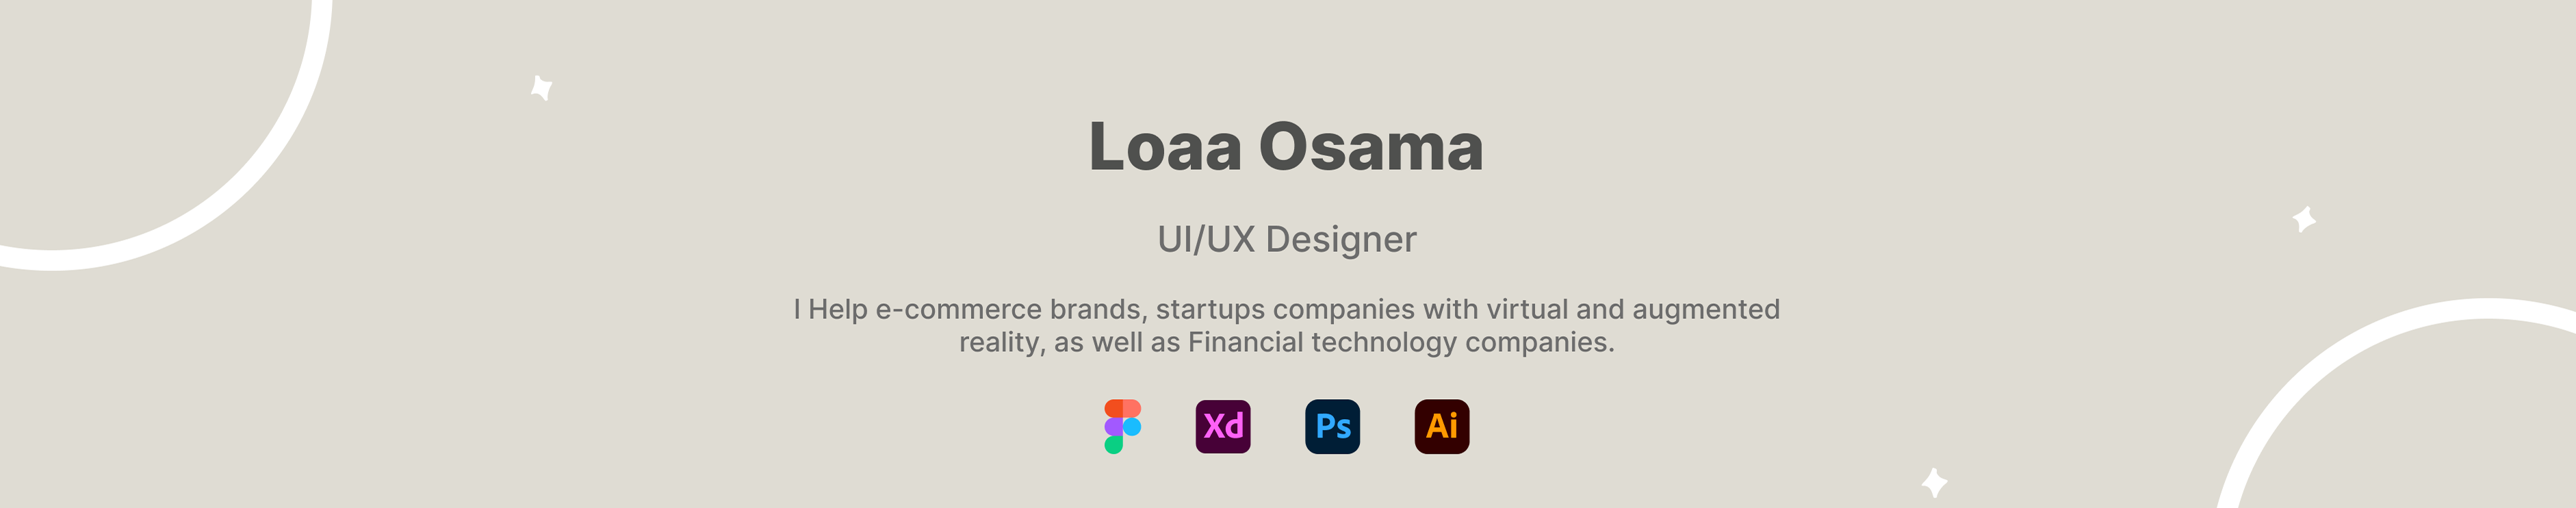 loaa osama's profile banner